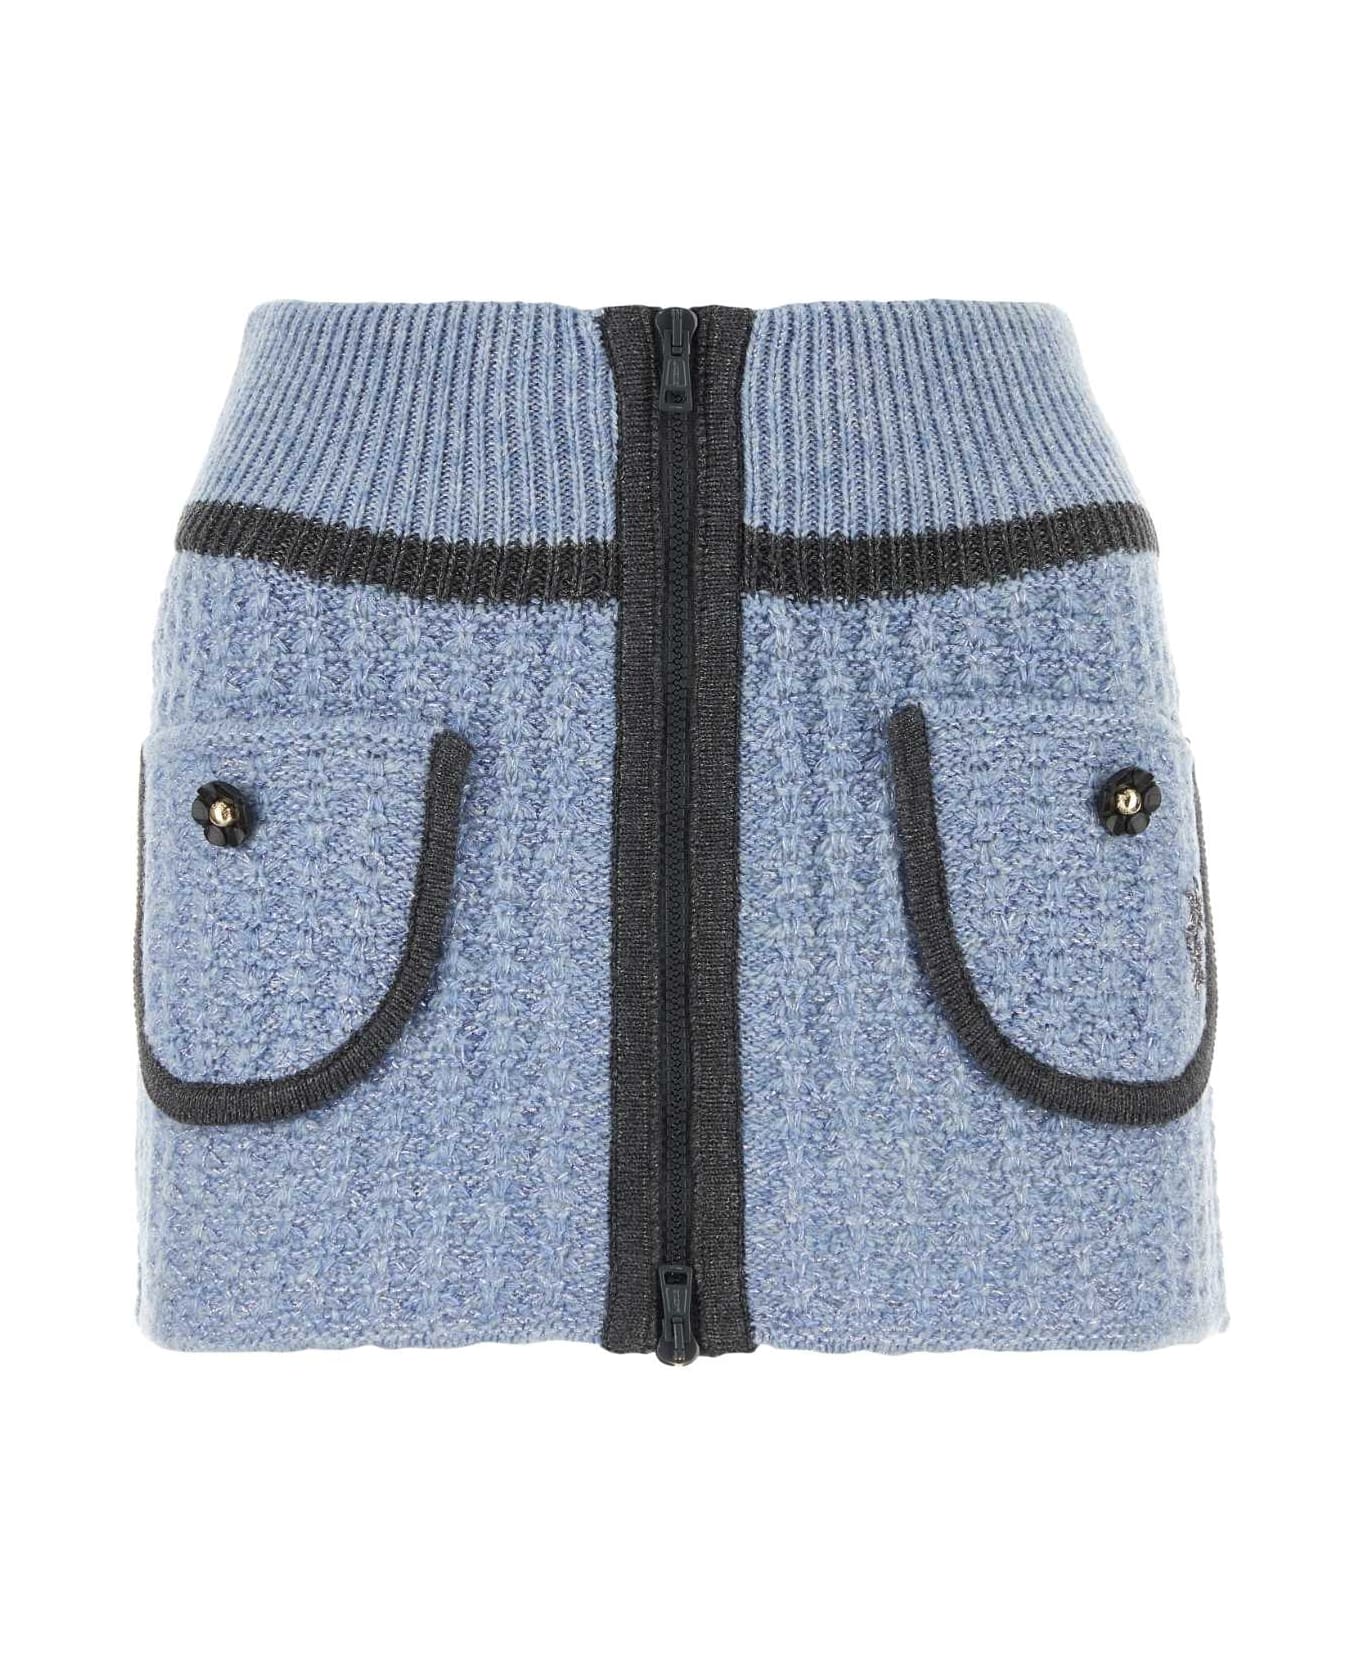 Cormio Cerulean Wool Blend Mini Skirt - BLUEPERVINCA